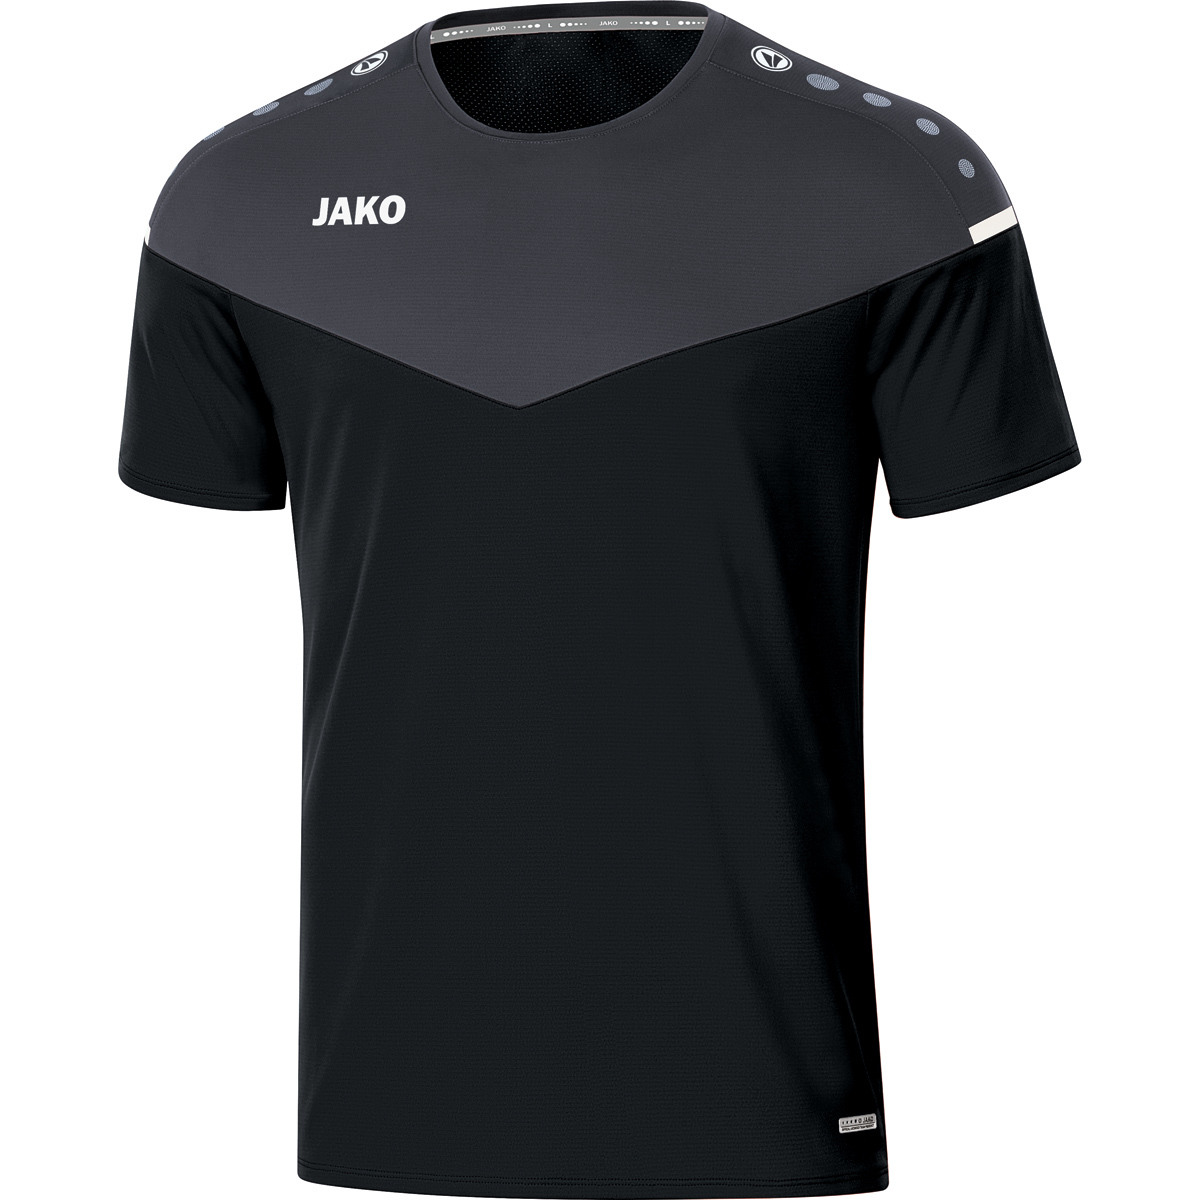 JAKO T-Shirt Champ 2.0 S, schwarz/anthrazit, Herren, 6120 Gr